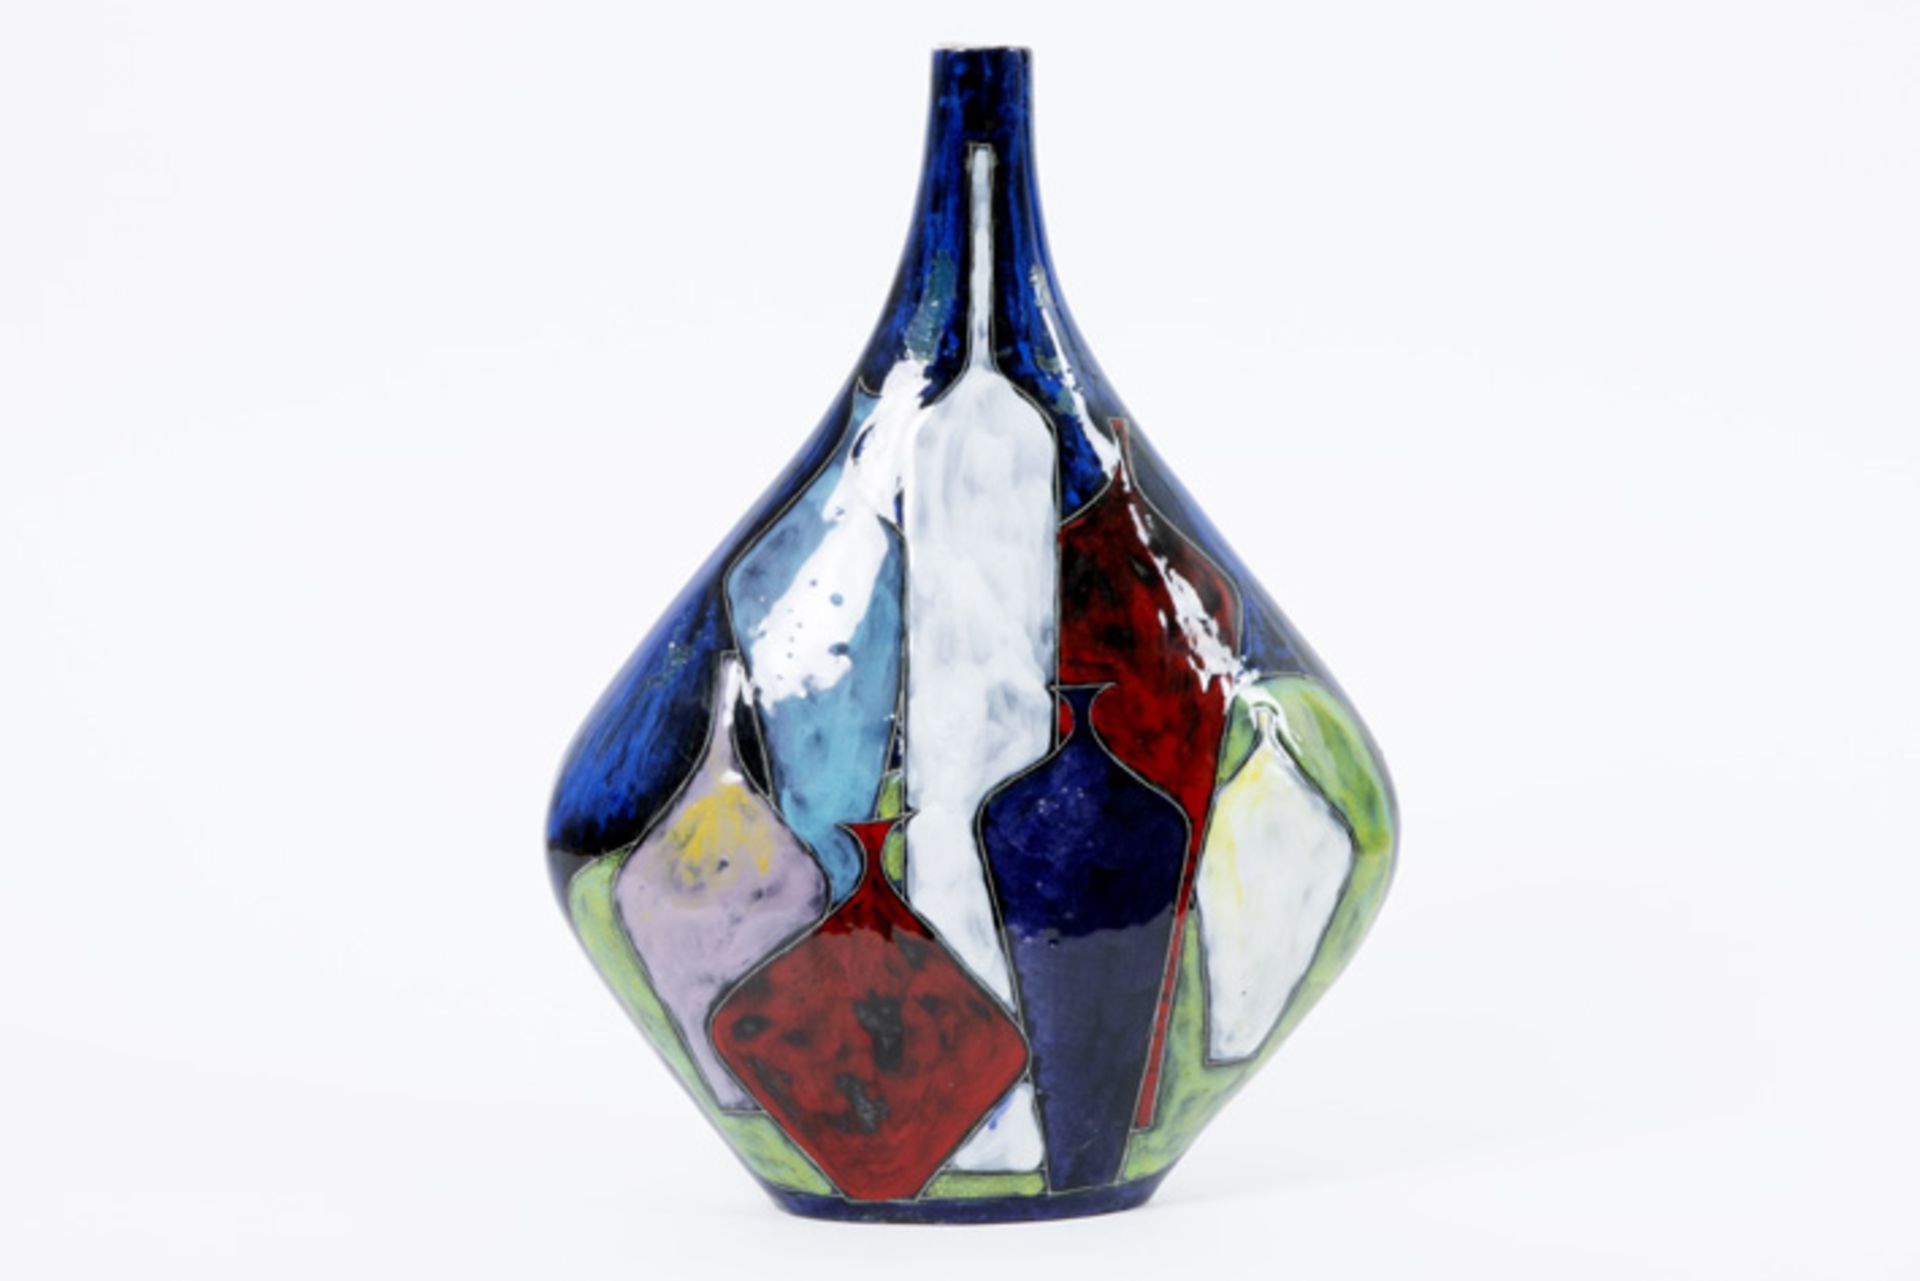 Italian "Marcello Fantoni" vase in glazed earthenware - signed and marked 'Fantoni Italy'||FANTONI M